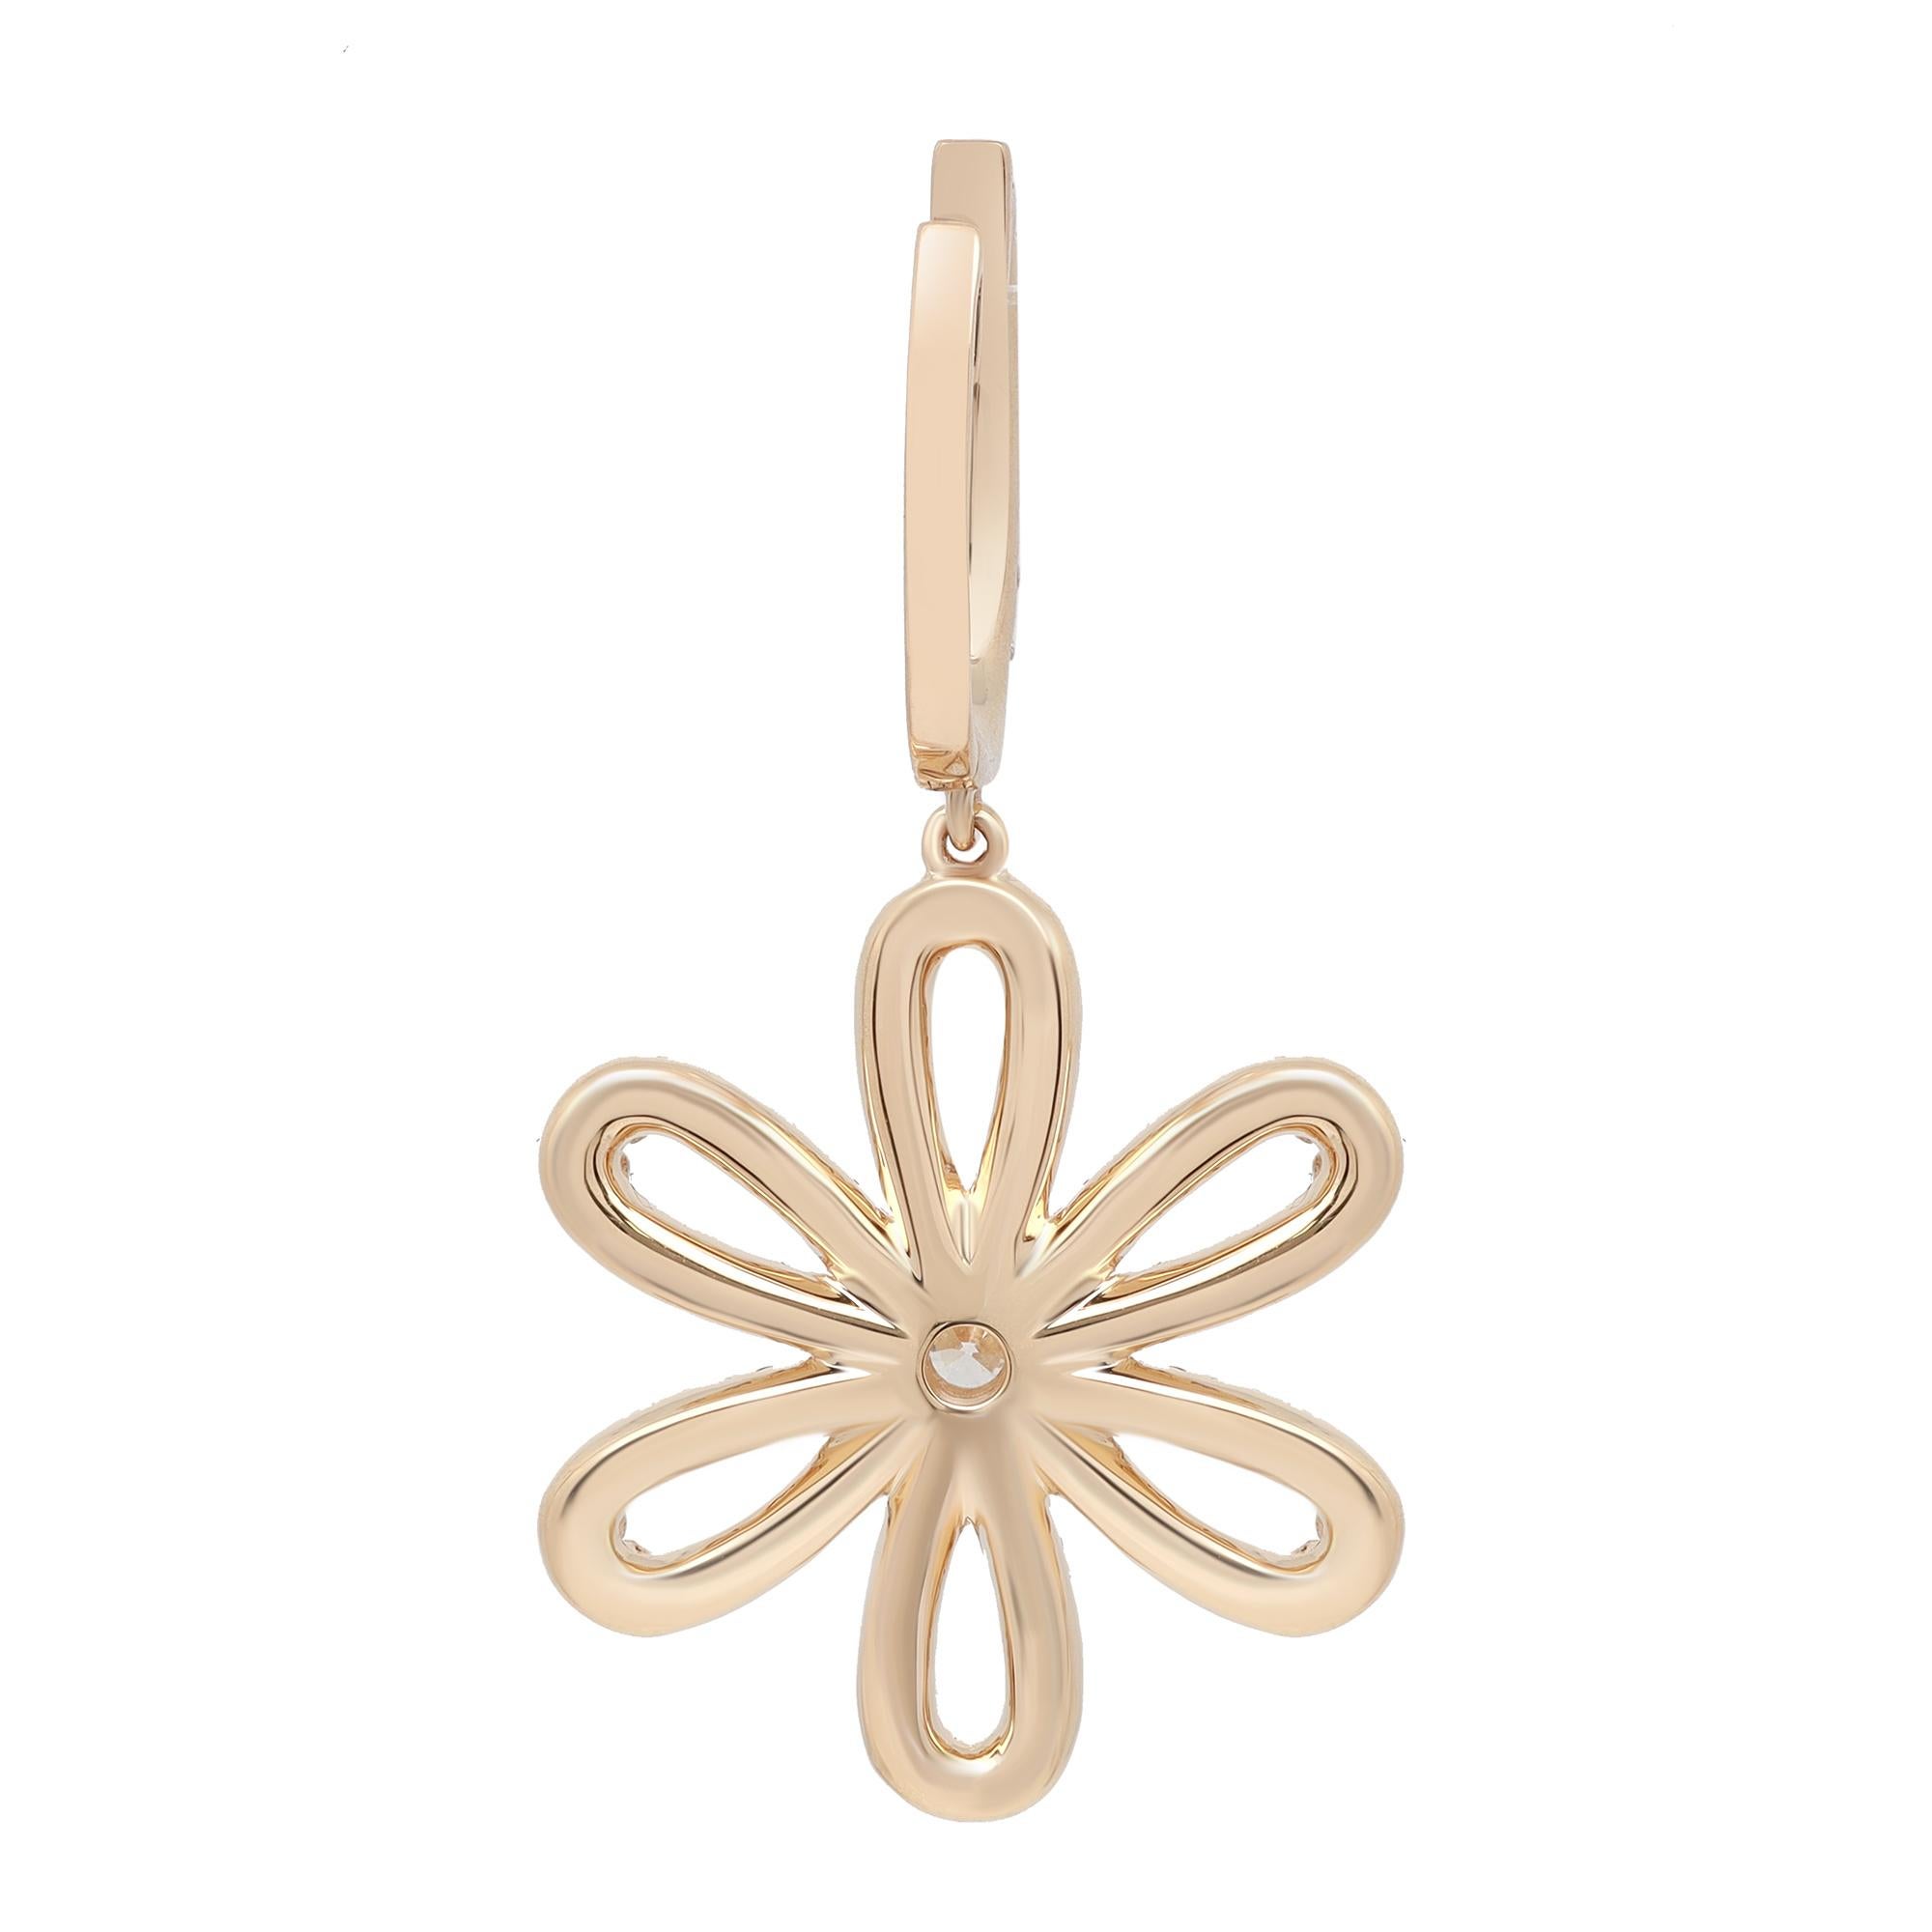 Rachel Koen 2.57Cttw Round Cut Diamond Flower Drop Earrings 18K Yellow Gold In New Condition For Sale In New York, NY